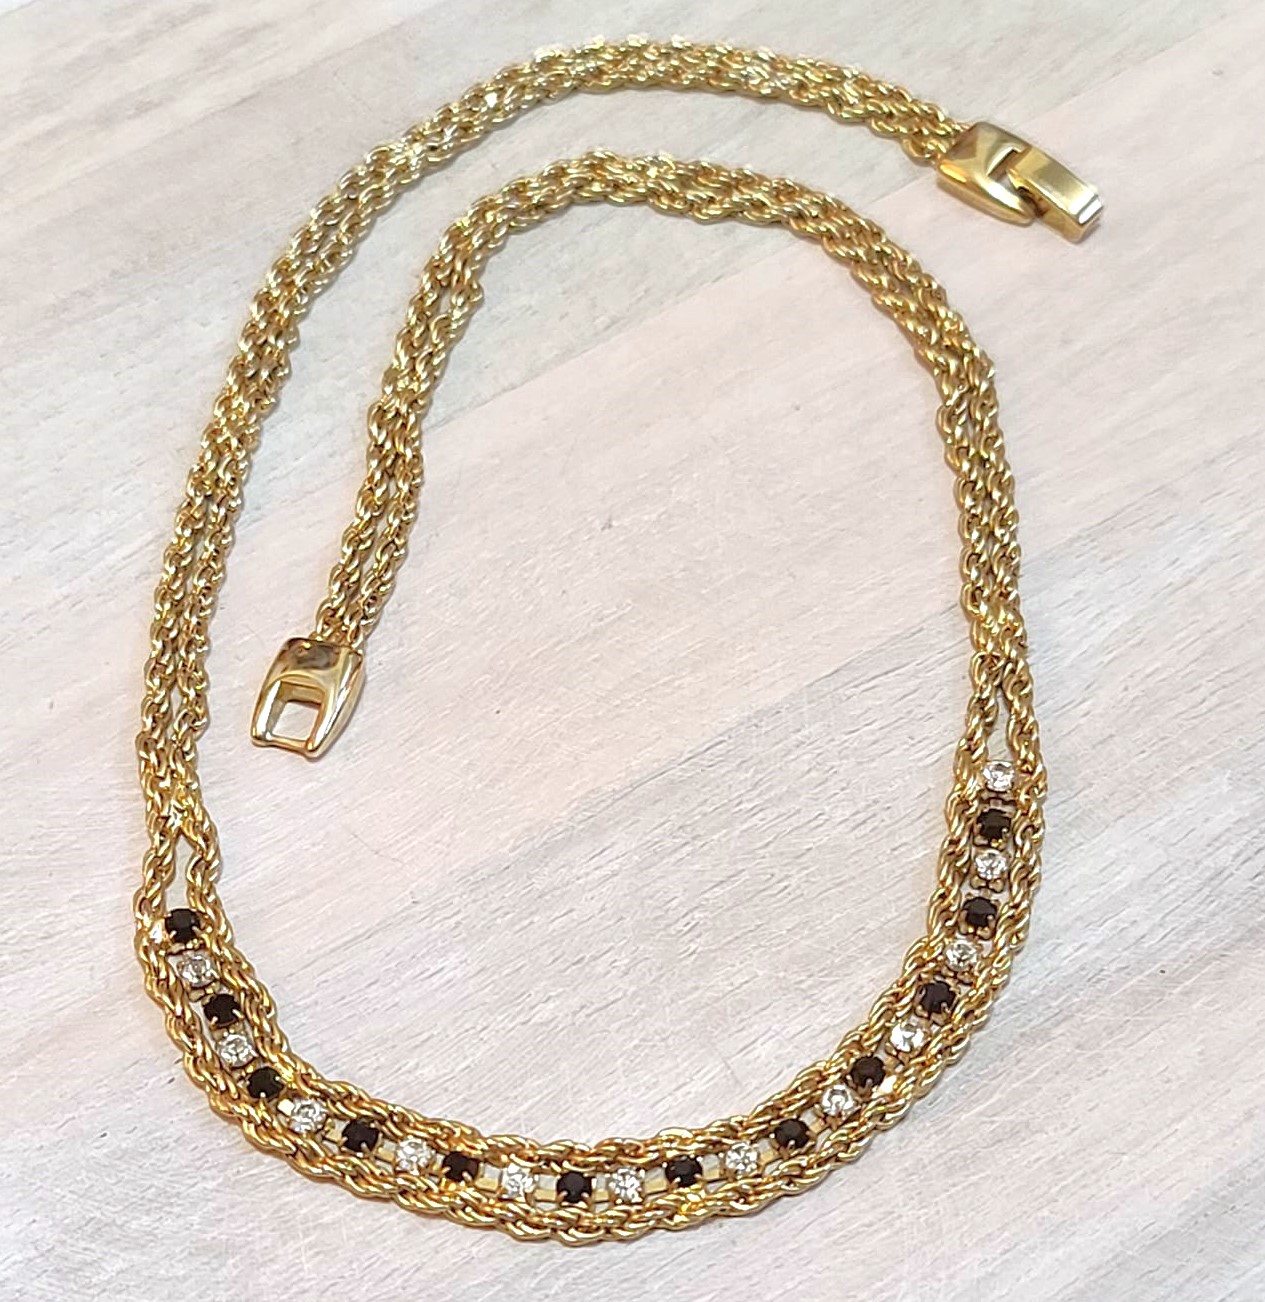 Rhinestone chain link necklace, black and white rhinestones,vintage necklace